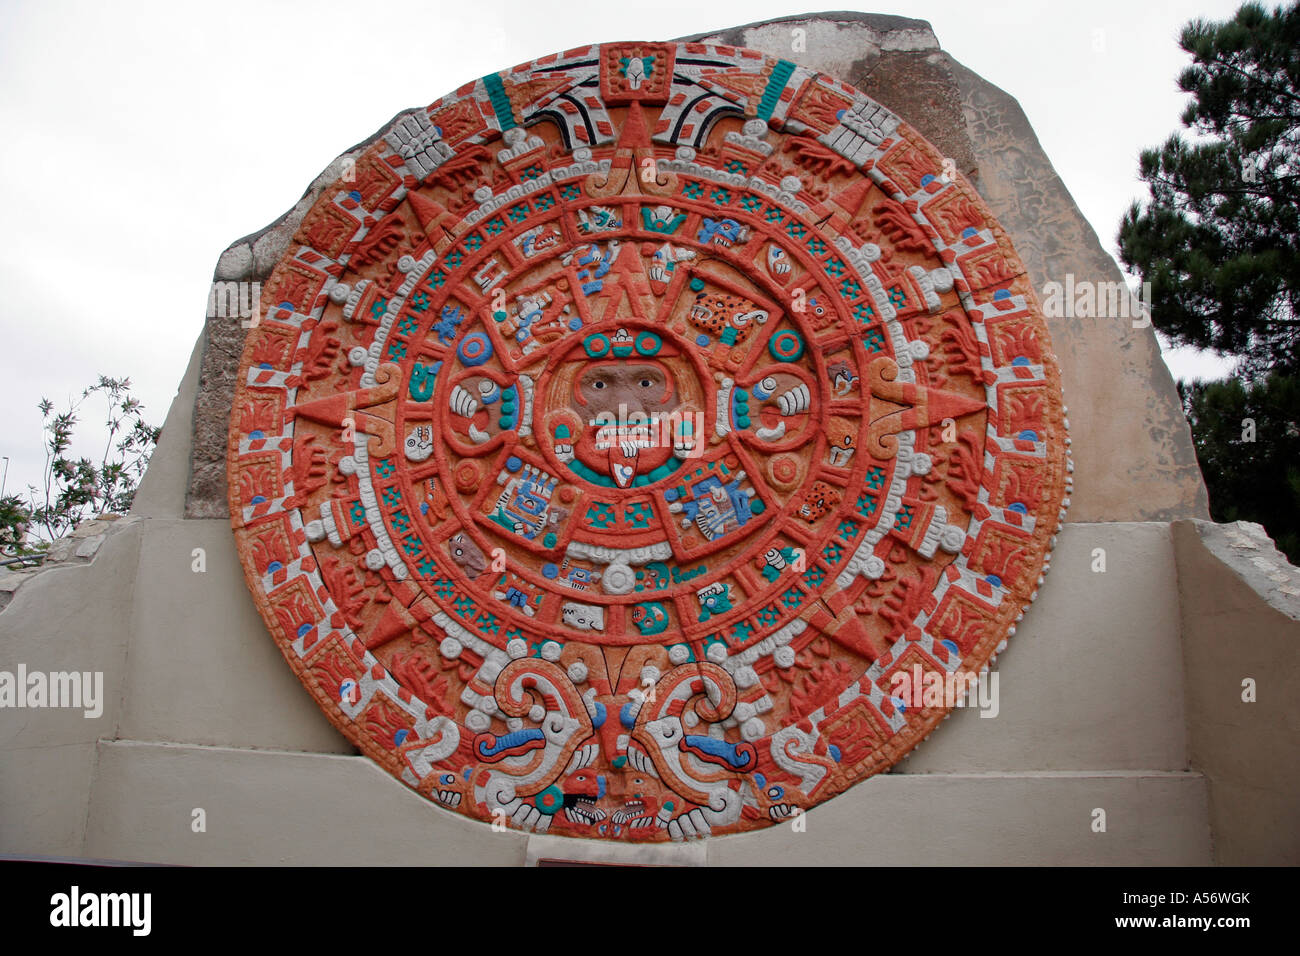 Painet ja0985 usa replica aztec sun wheel el cuidad juarez paso texas photo 2005 latin america borders 20031001 country Stock Photo